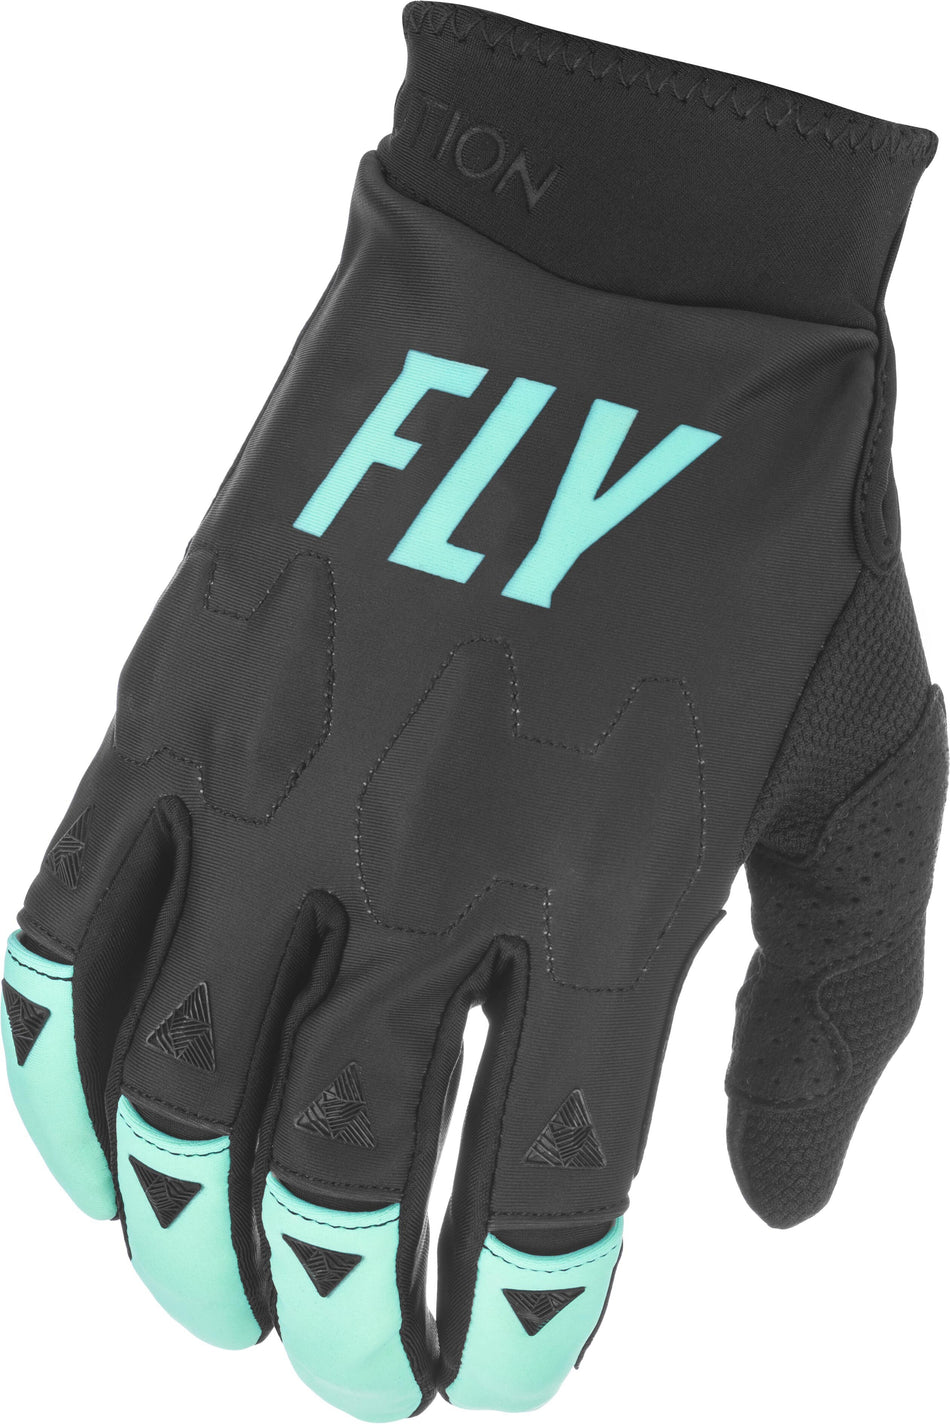 FLY RACING Evolution Dst L.E. Gloves Mint/Black Sz 09 374-11909